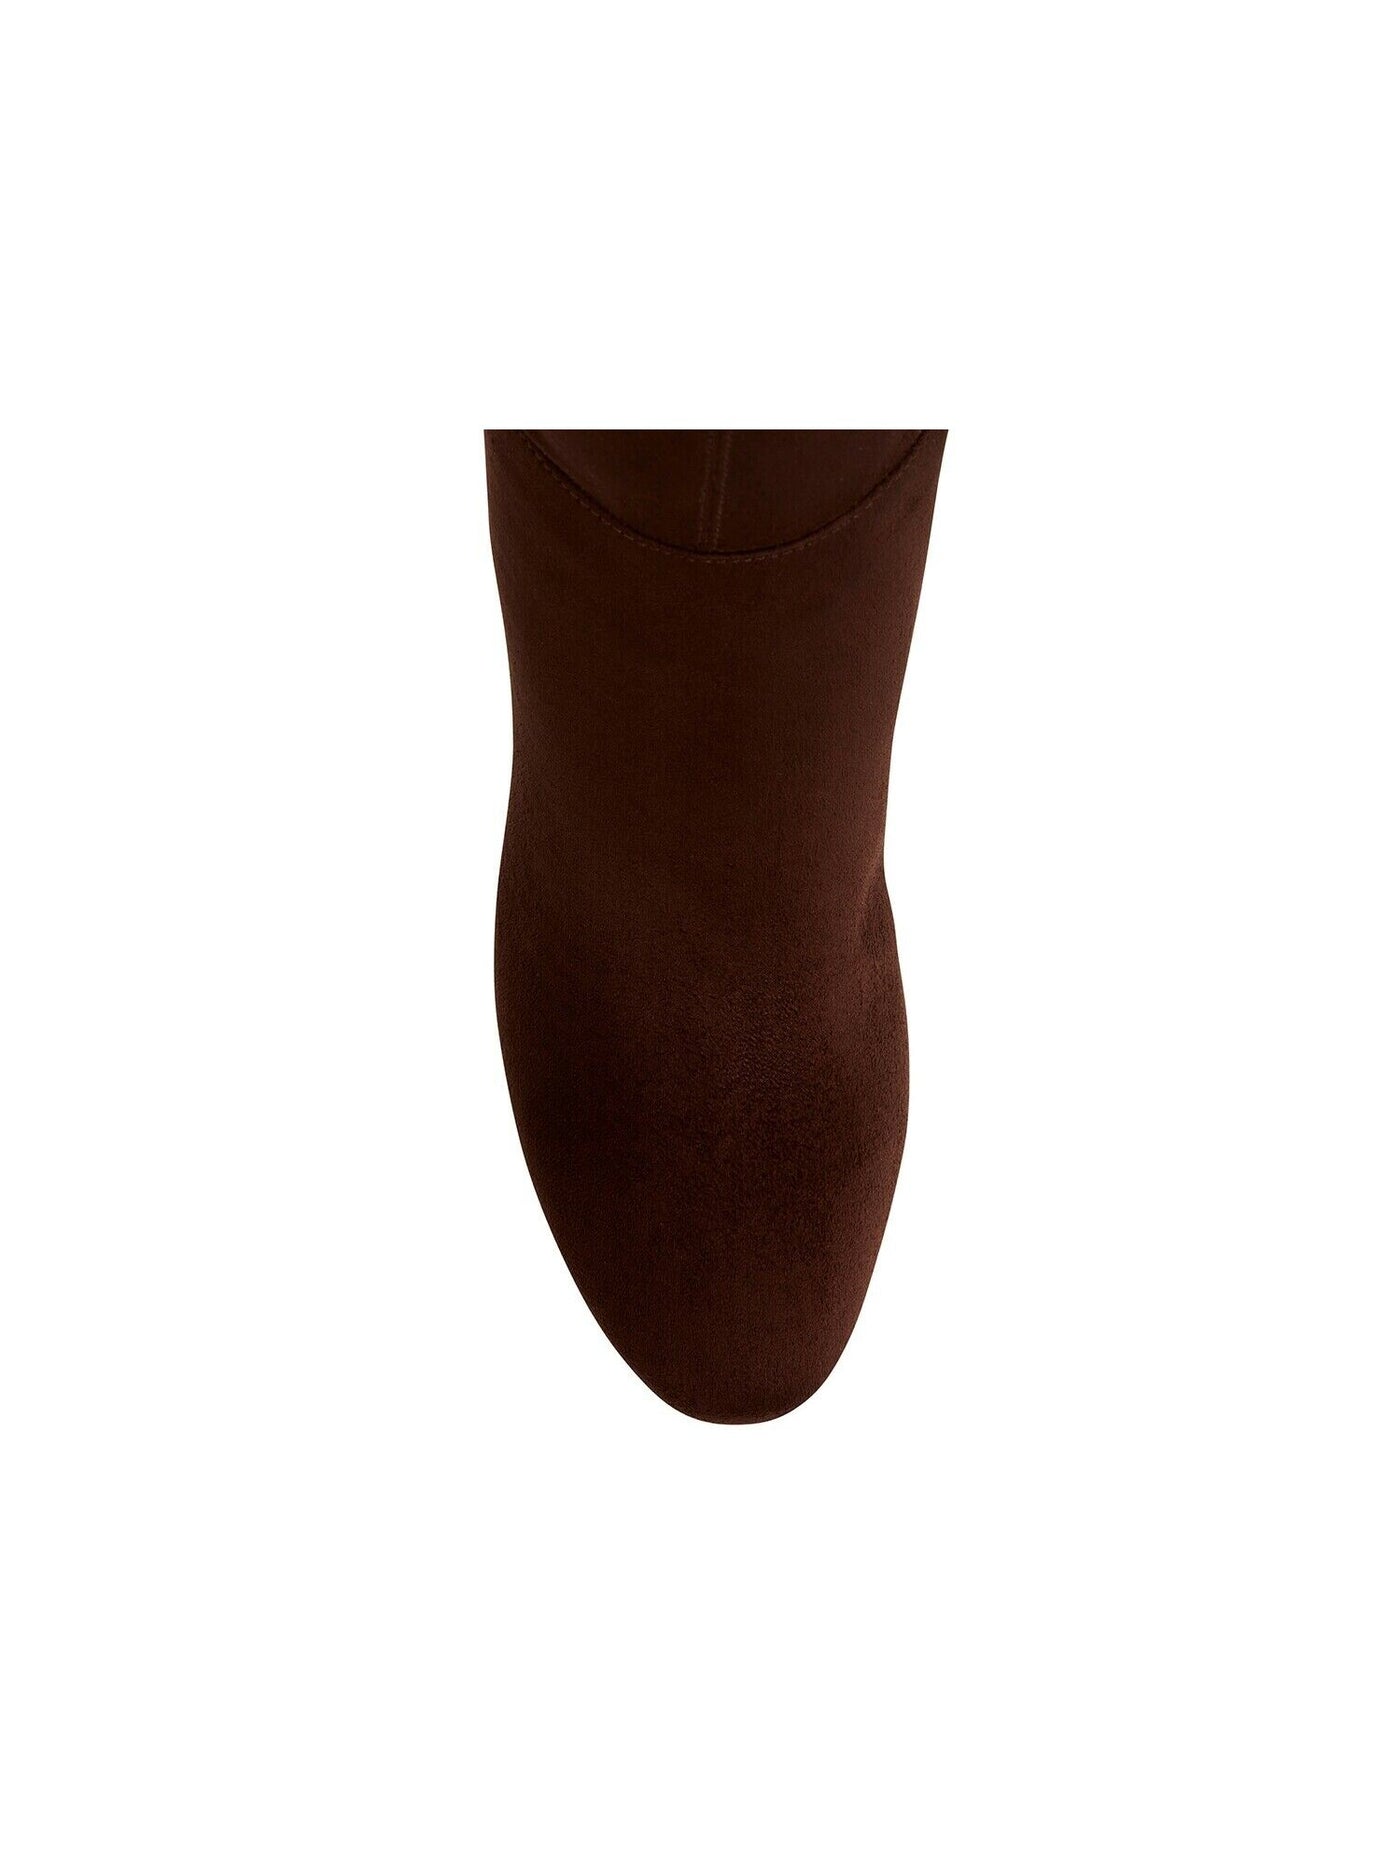 CHARTER CLUB Womens Brown Flower Grommets Tie Detail Jaccque Almond Toe Block Heel Zip-Up Dress Boots Shoes 9.5